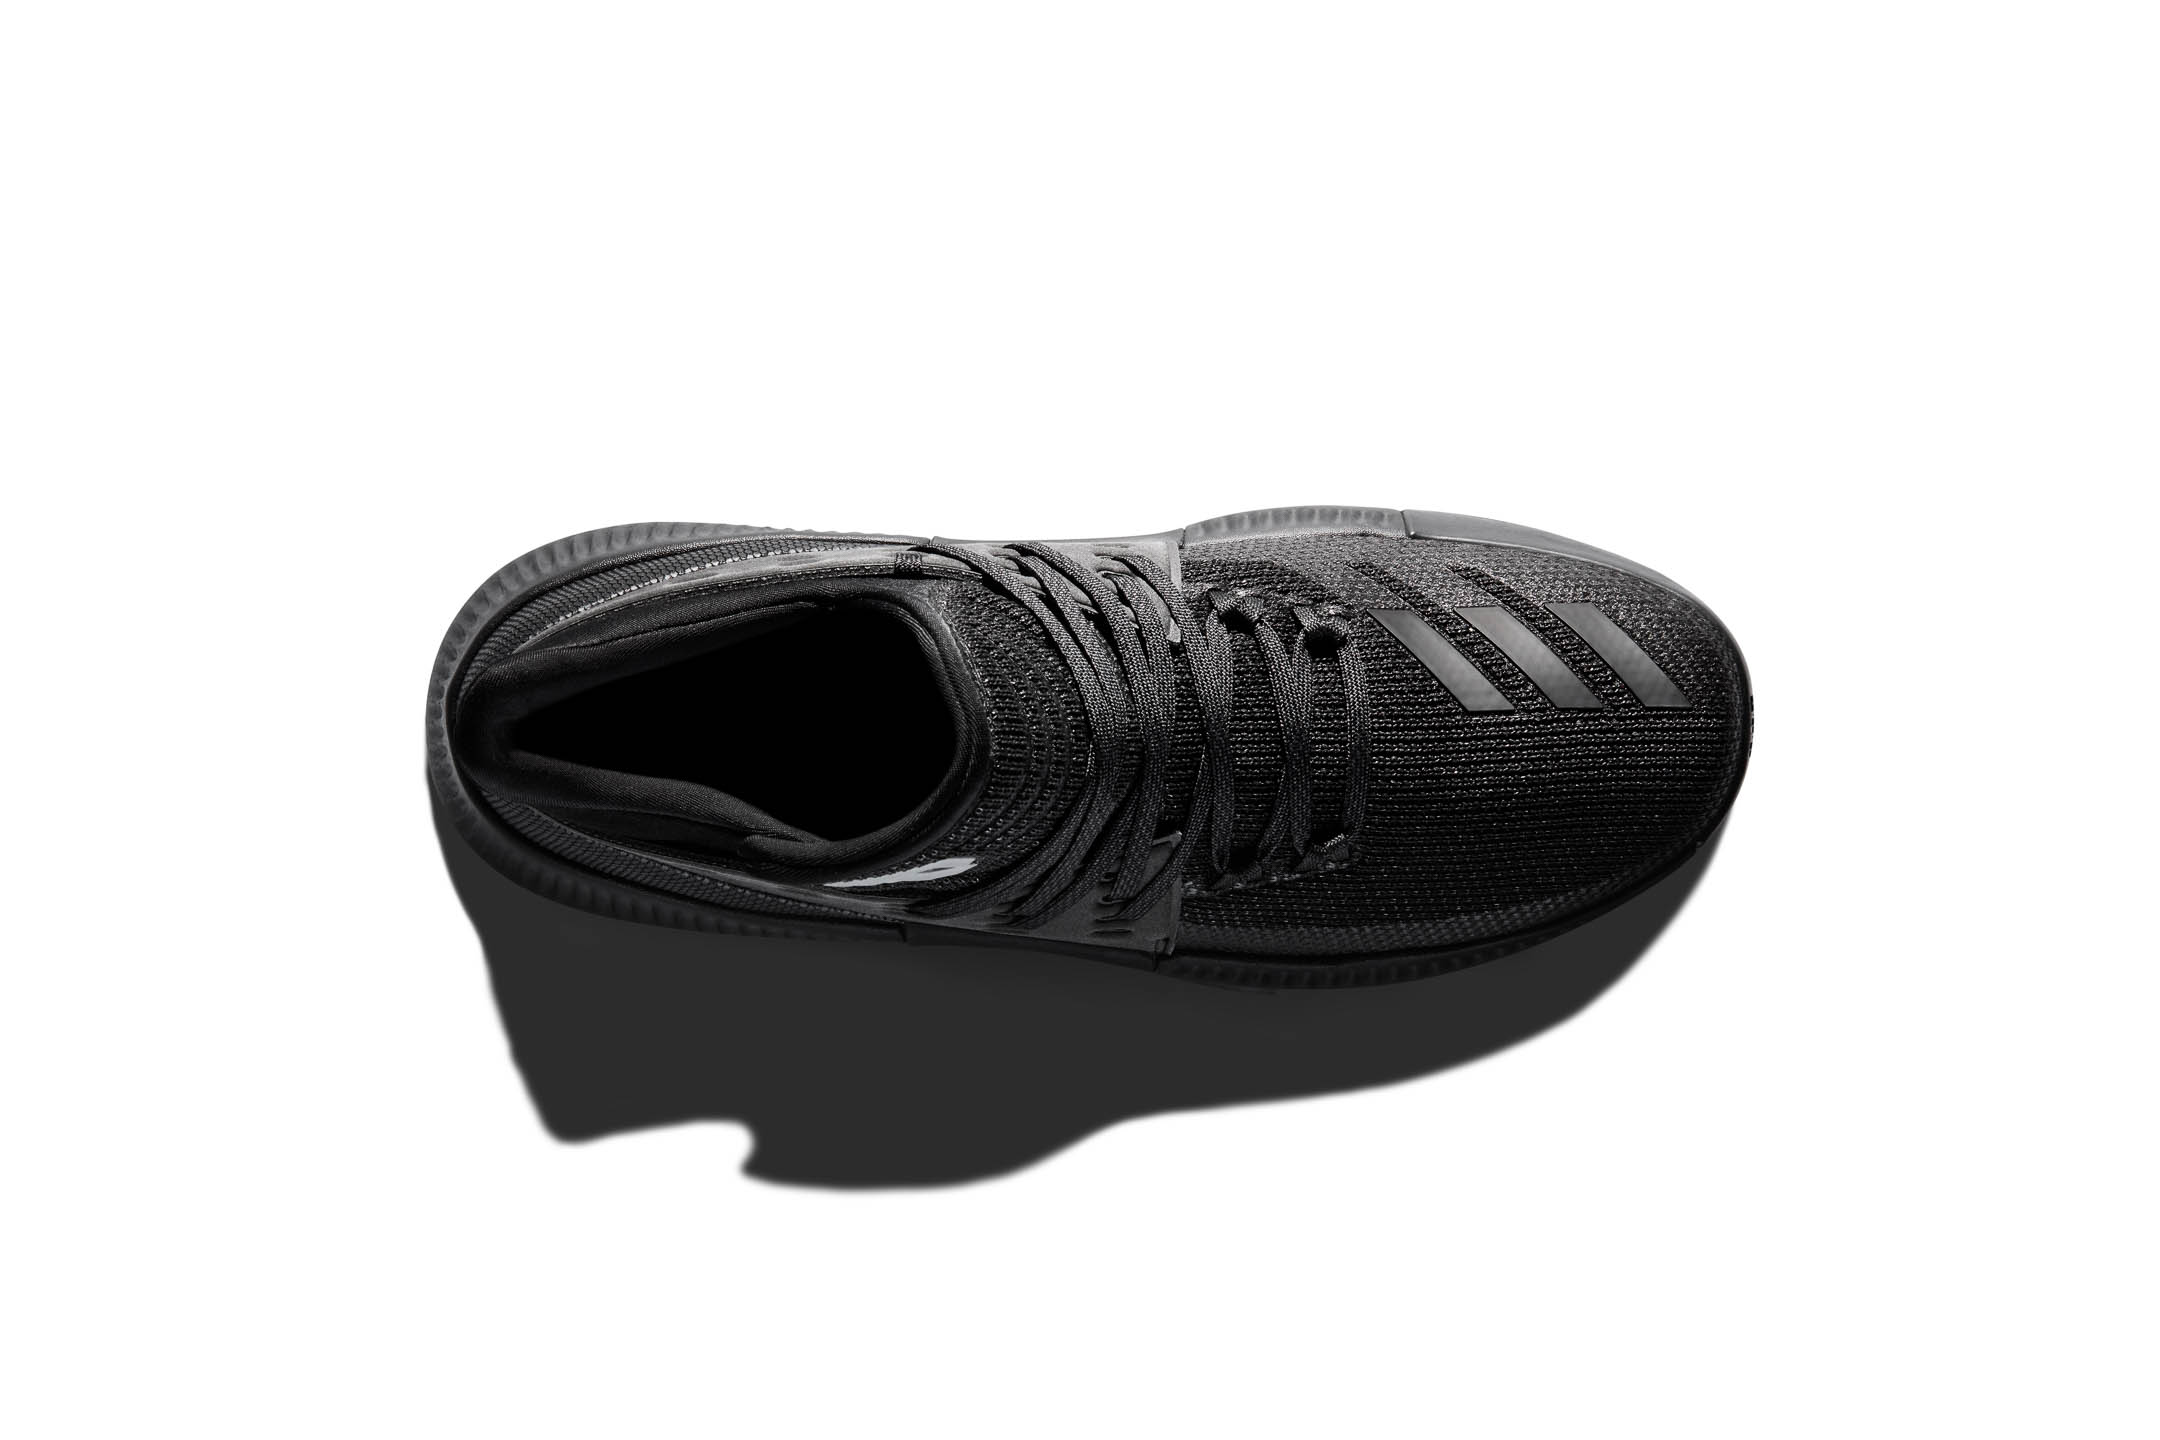 Adidas DLillard3 basketball shoe